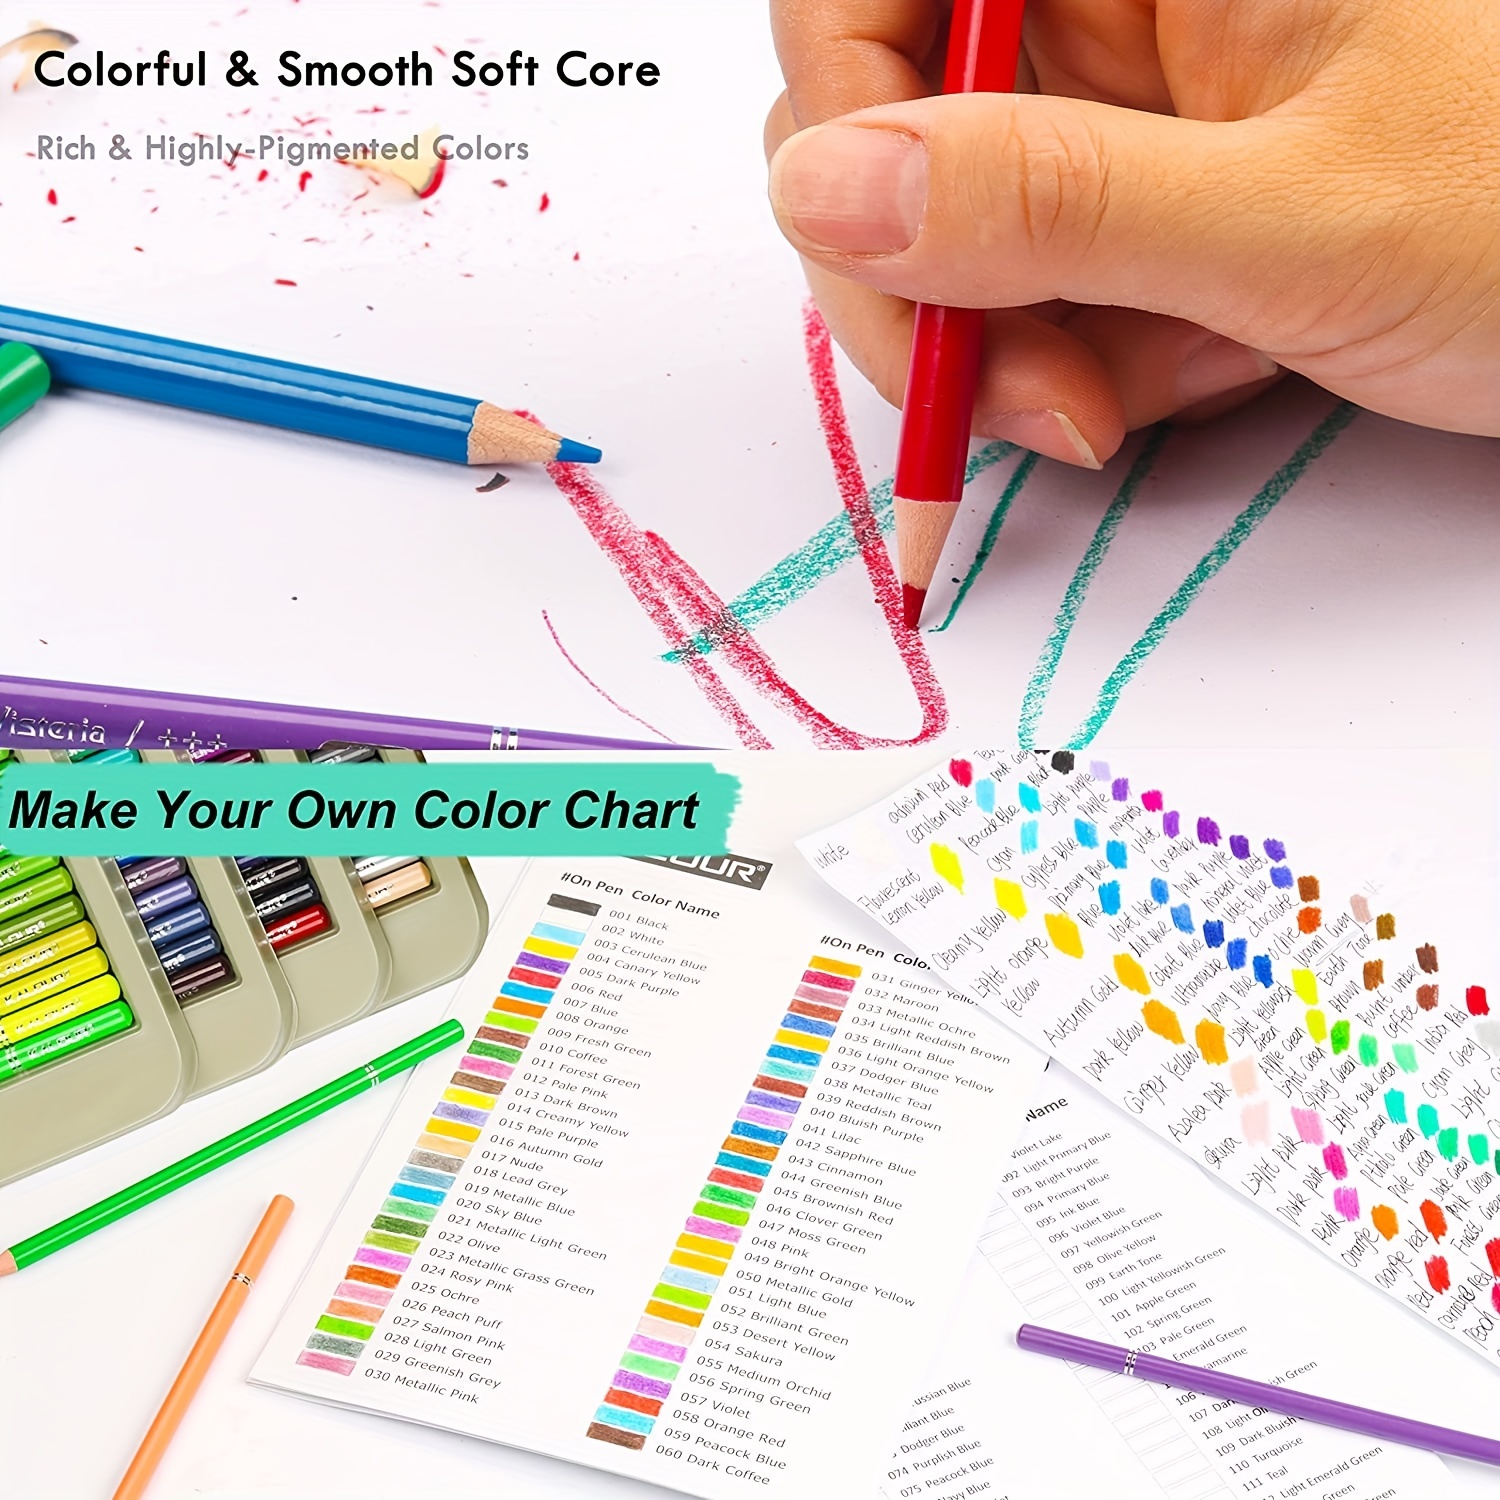 Castle Art Supplies 72 Colored Pencils Set  Quality Soft Core Colored  Leads for Adult Artists